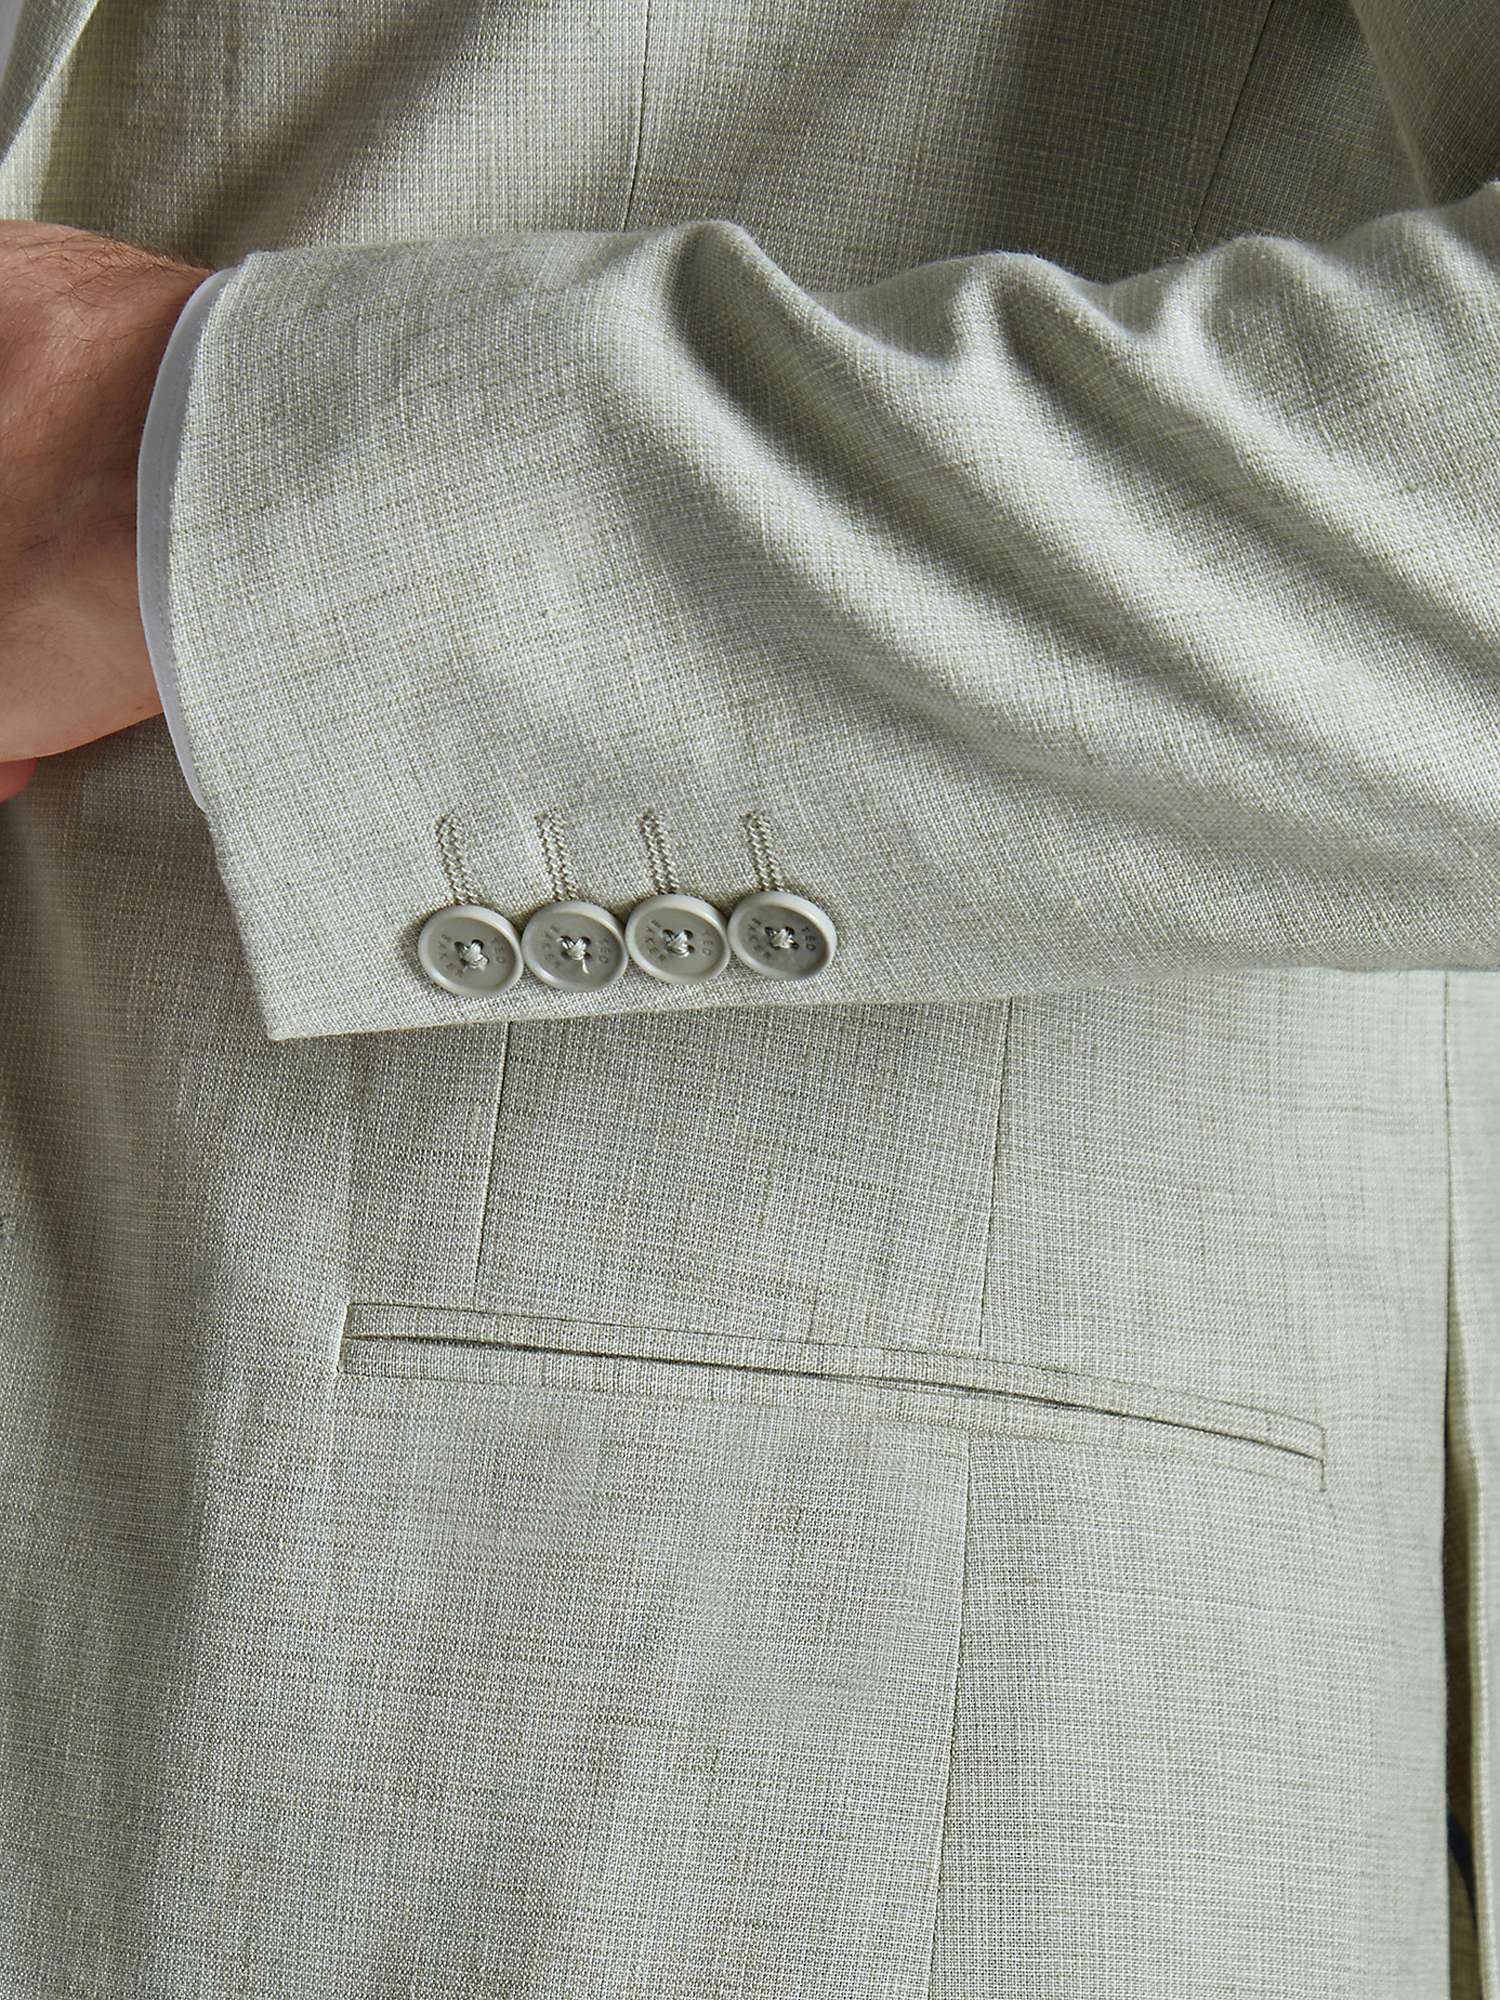 Buy Ted Baker Leo Linen Slim Fit Suit Jacket, Pistachio Online at johnlewis.com